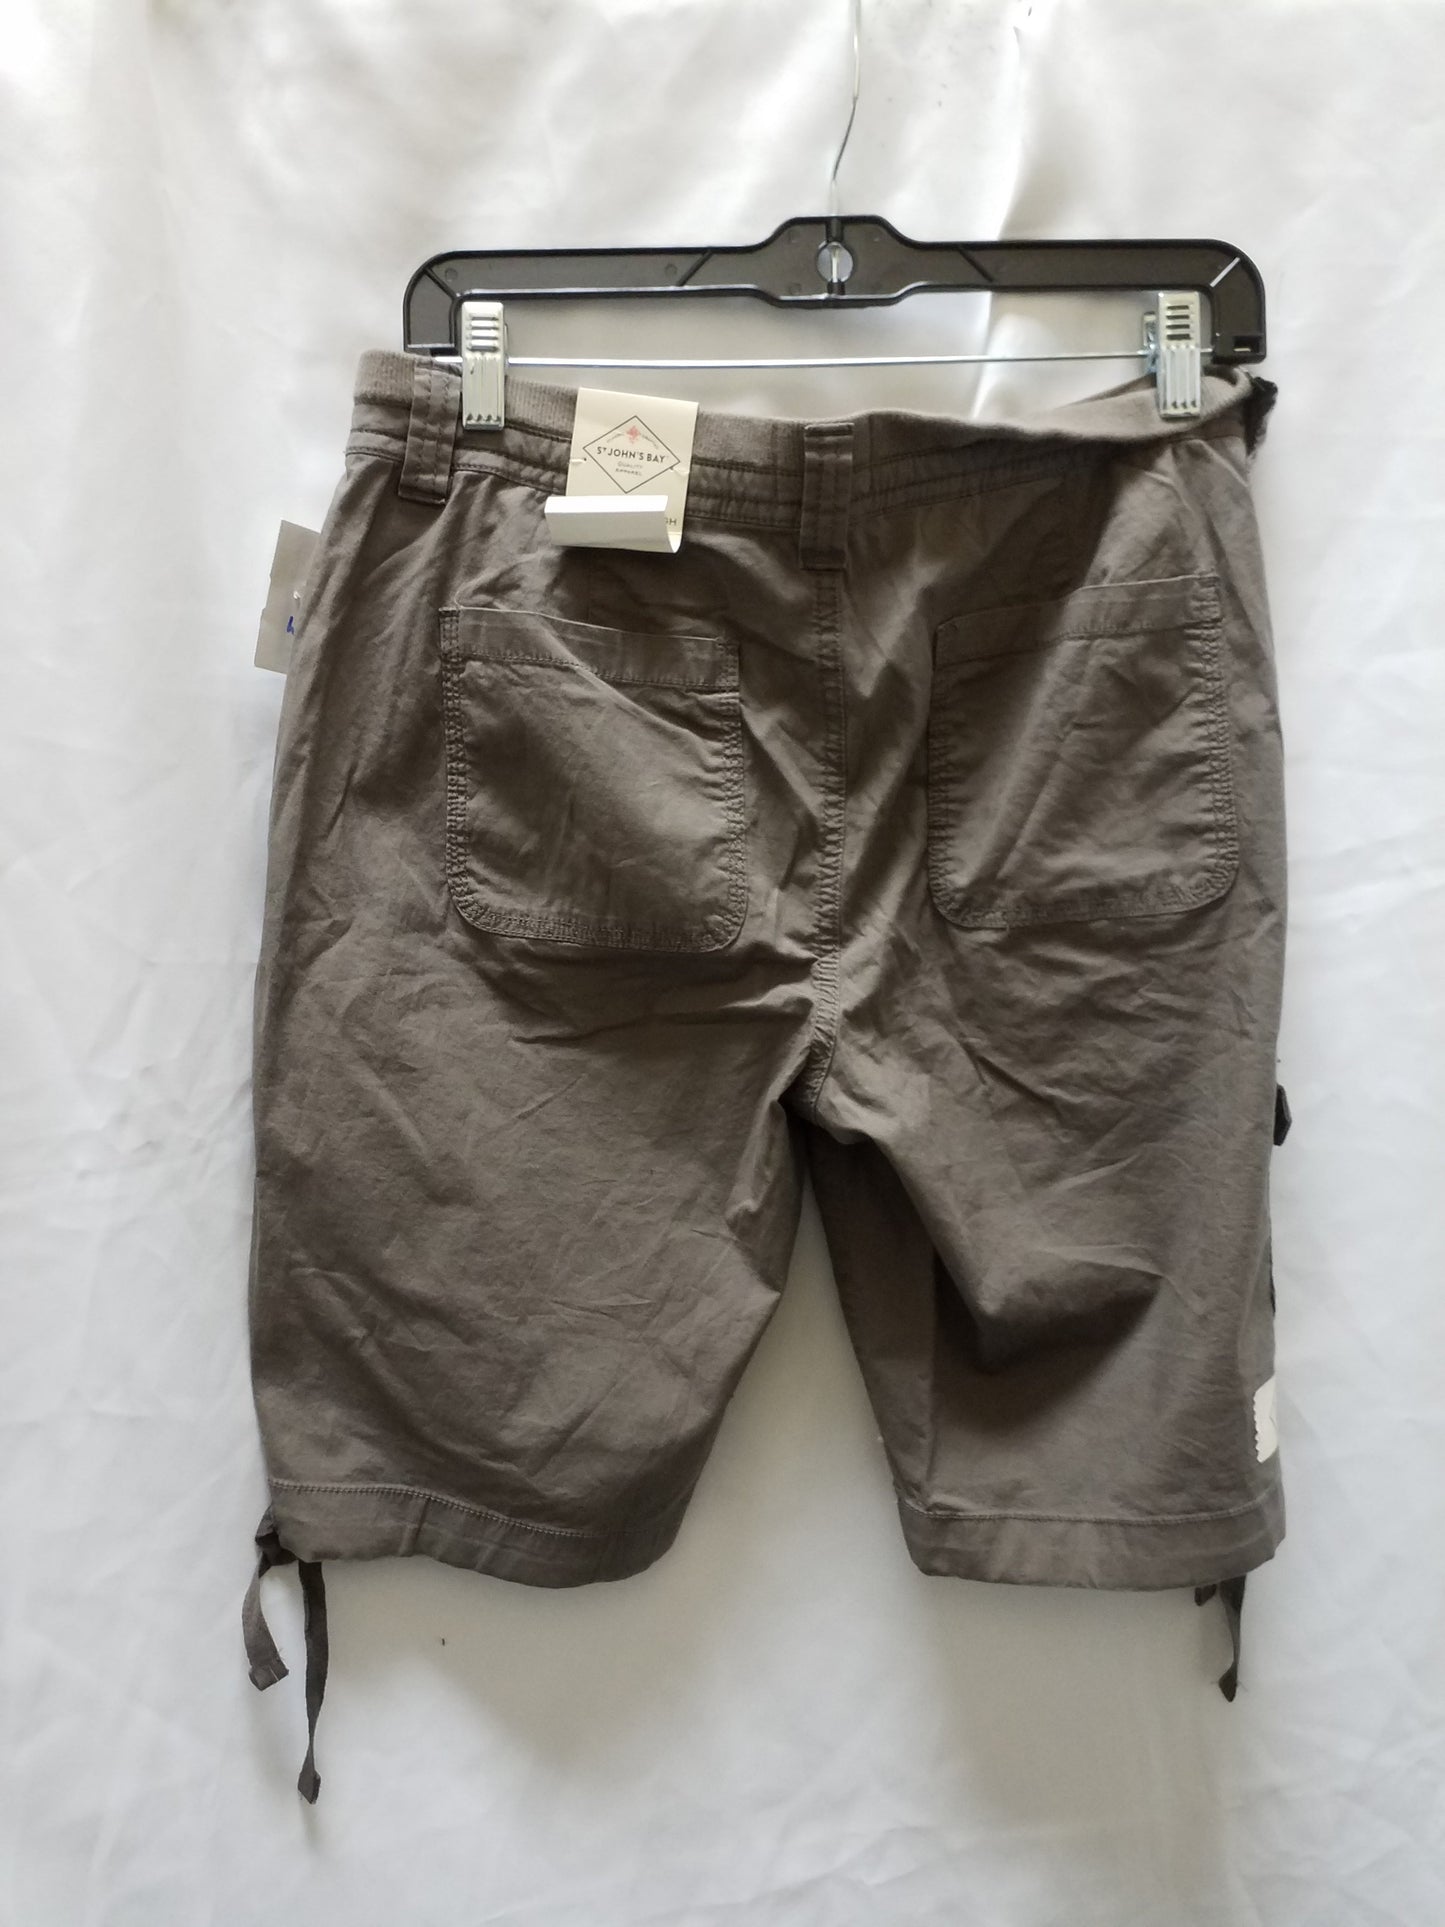 Shorts By St Johns Bay  Size: 6